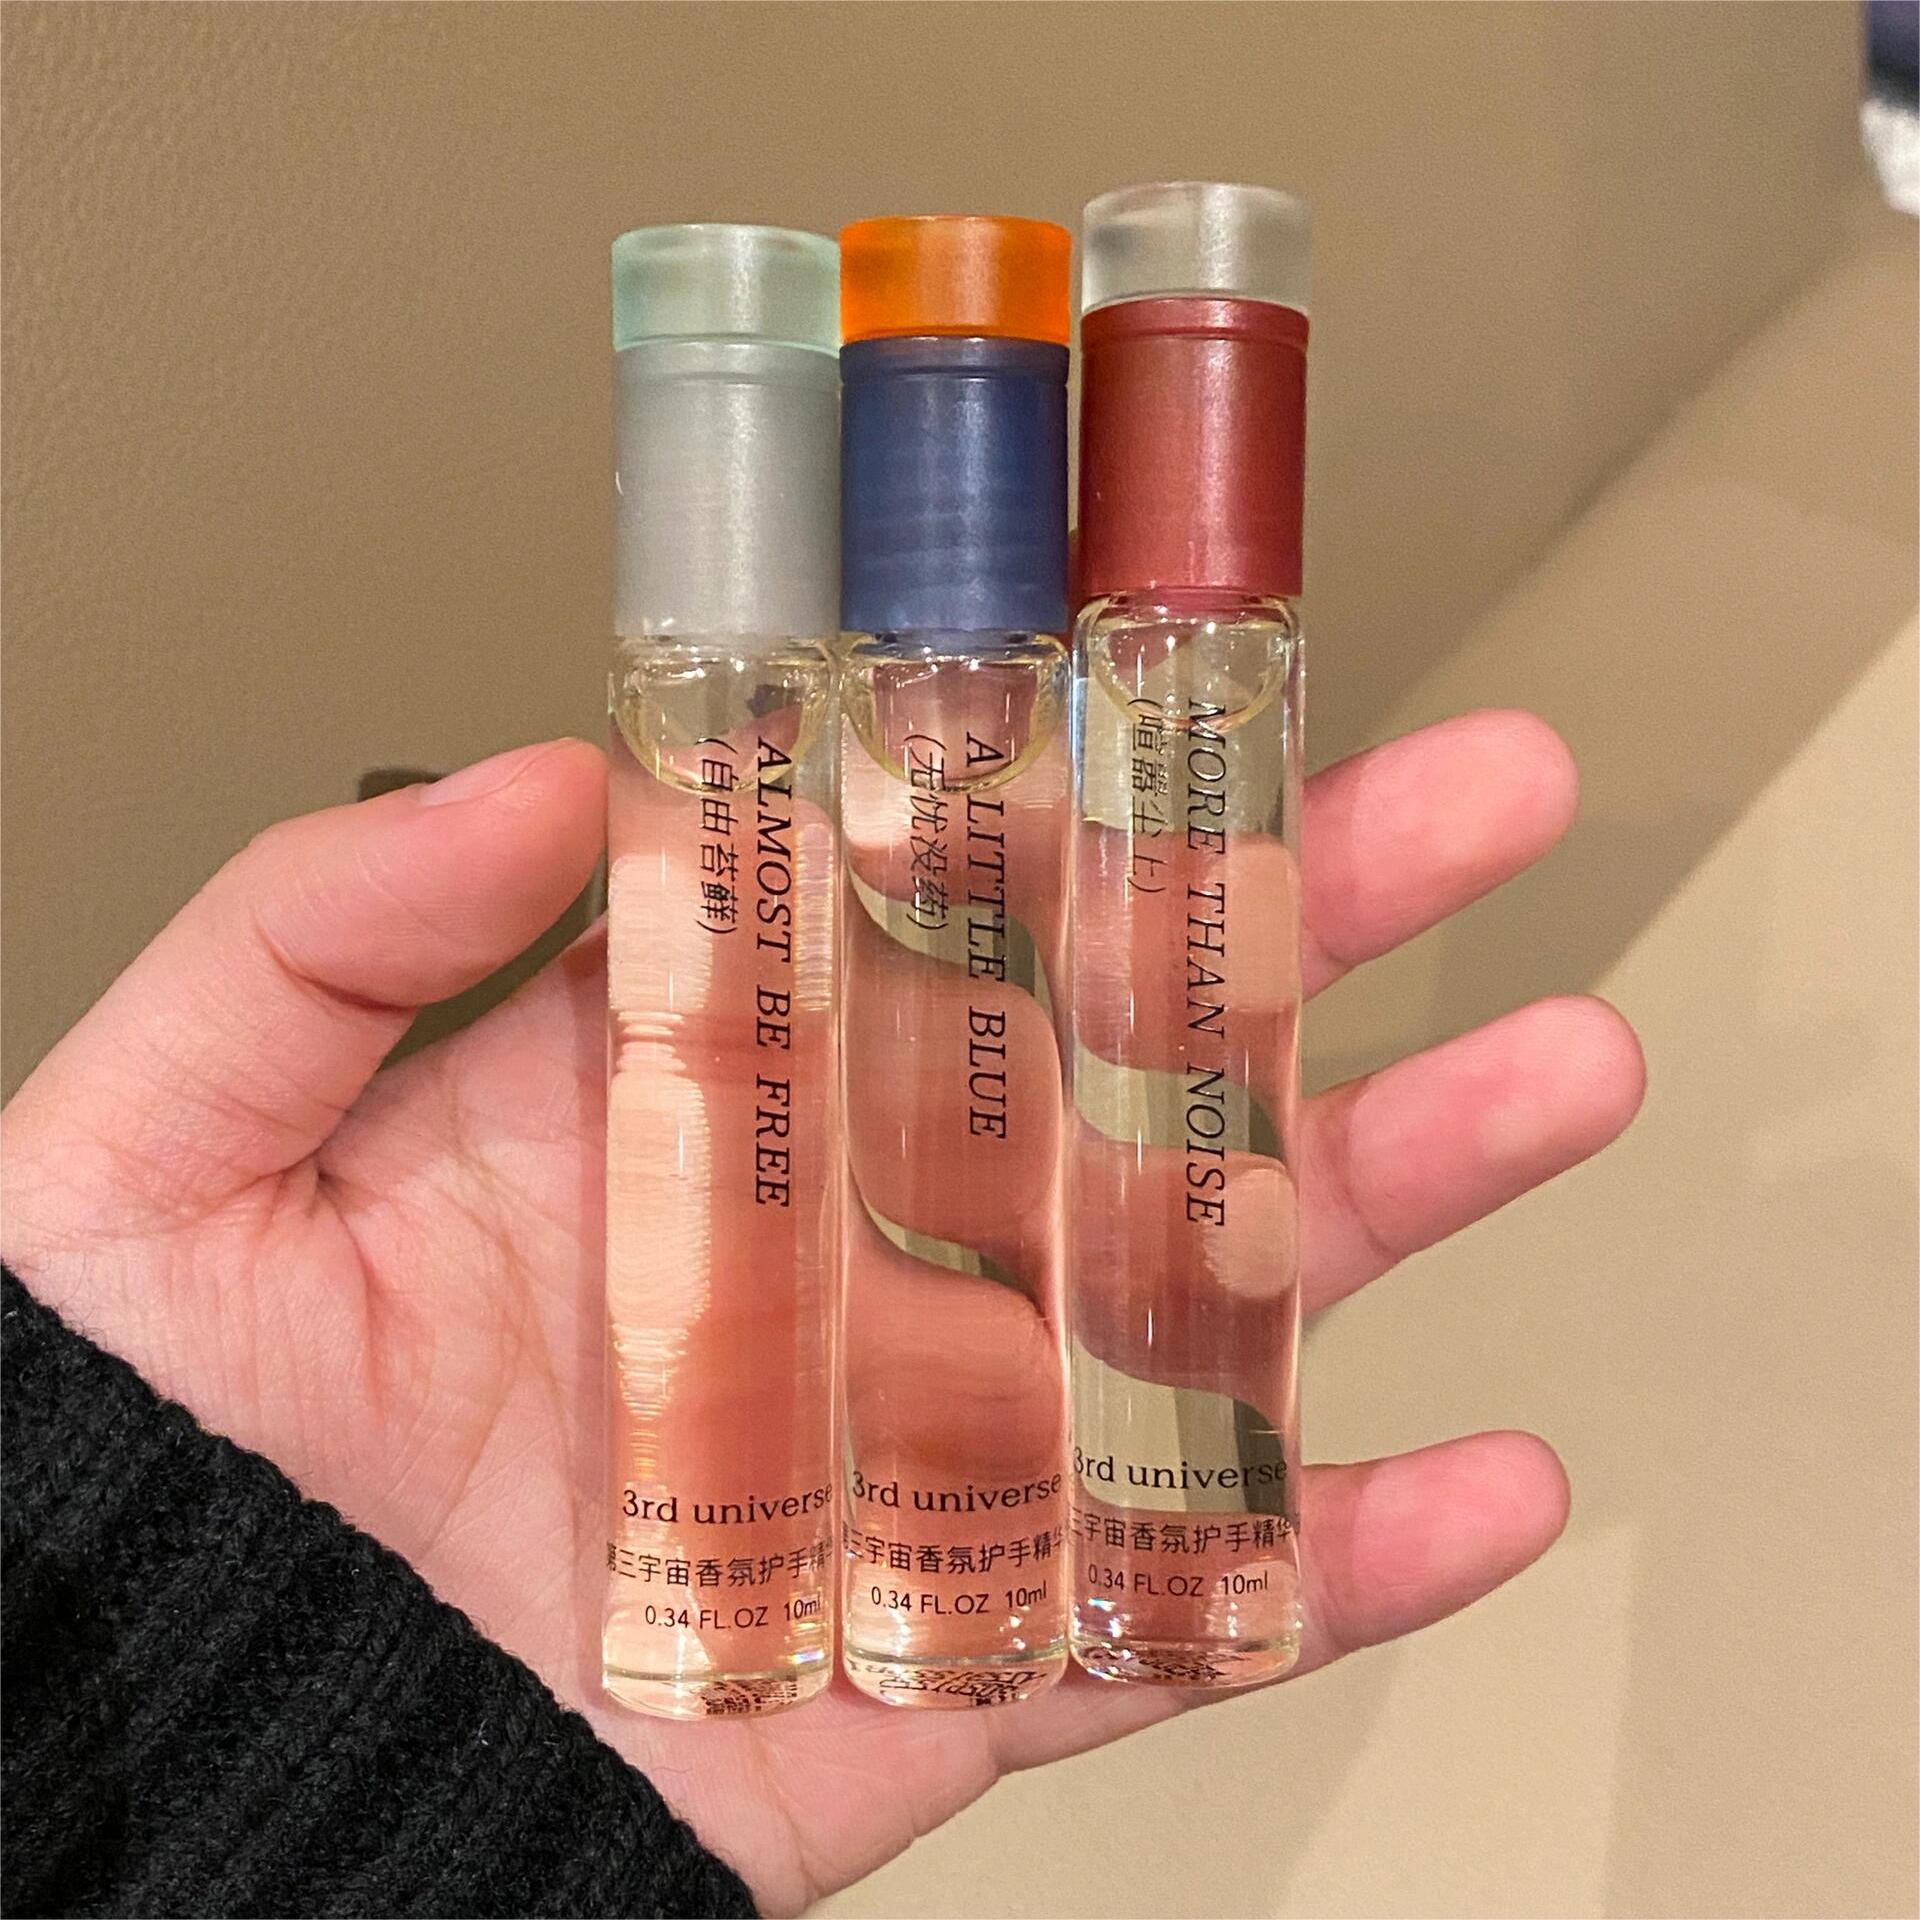 3rd universe Fragrance Moisturizing Hand Care Oil 10ml 第三宇宙香氛滋润护手精油